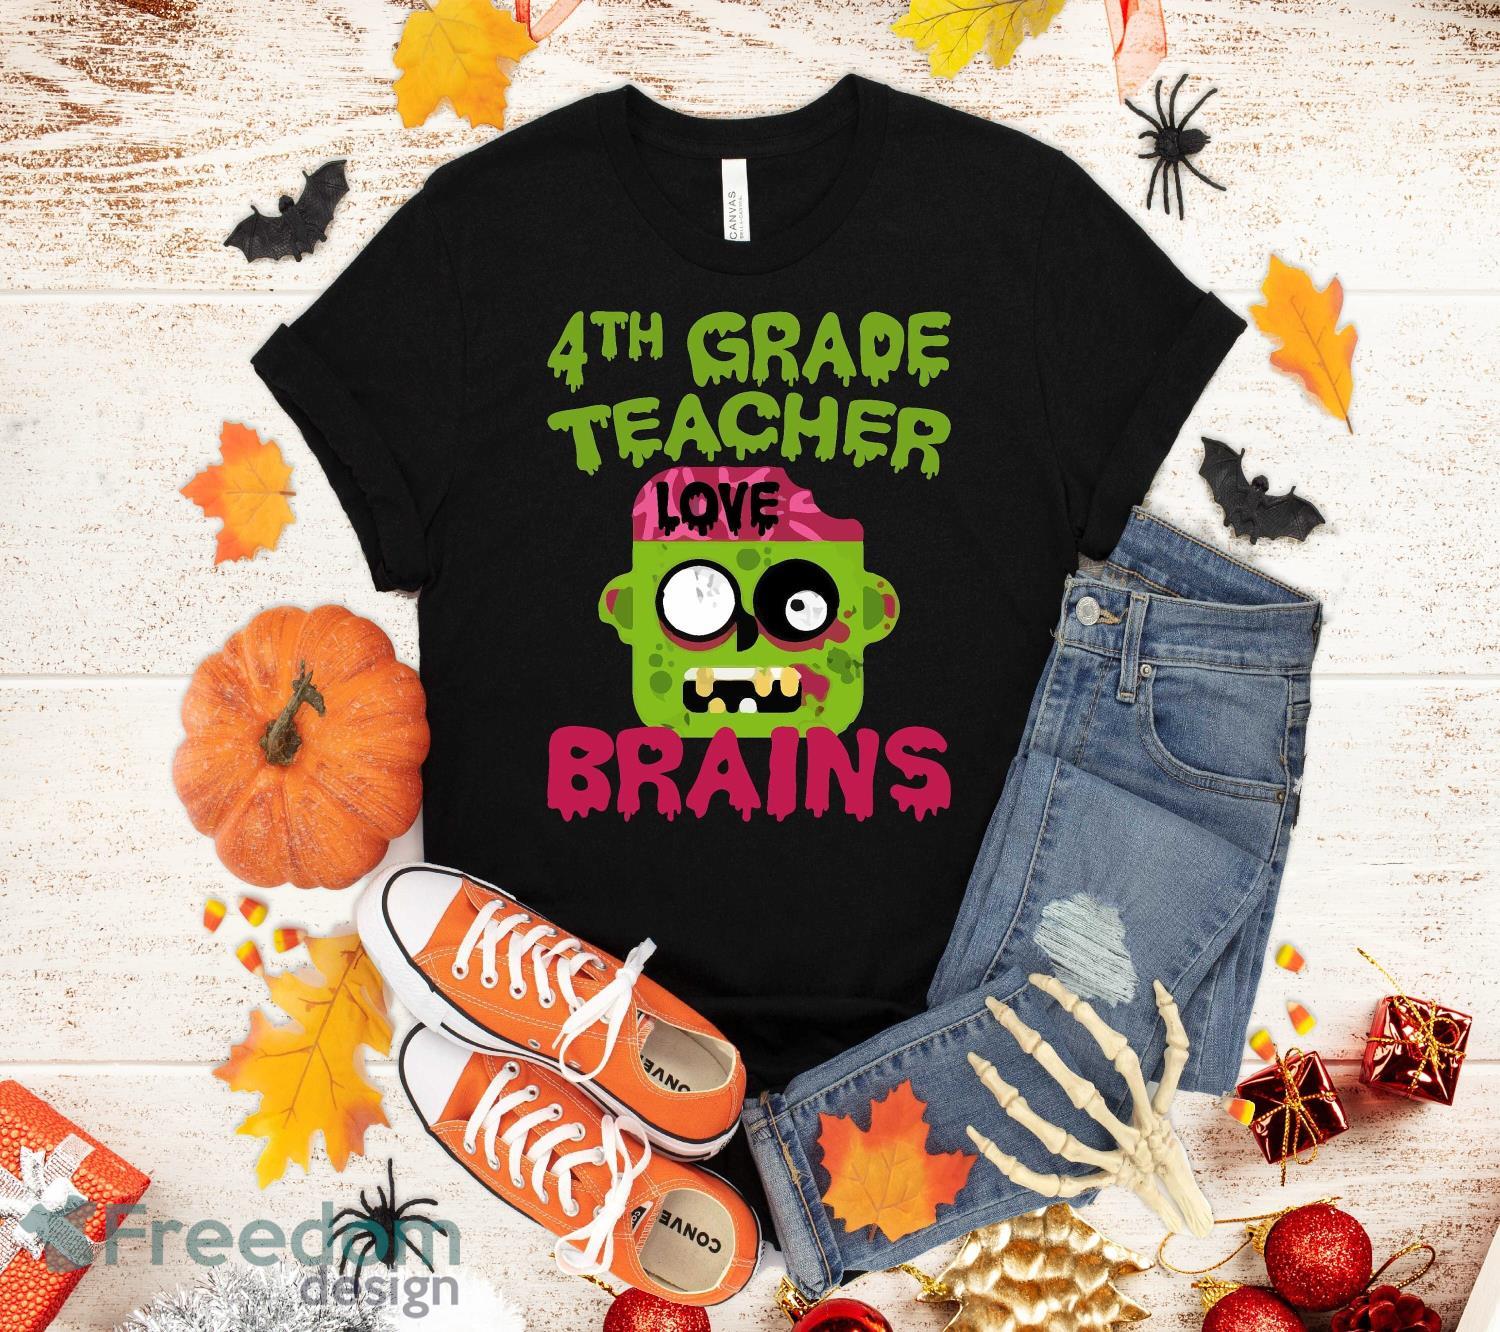 Teachers Brains Halloween Shirt For Men Girls Kids Gift T-Shirt Halloween Gift - Freedomdesign